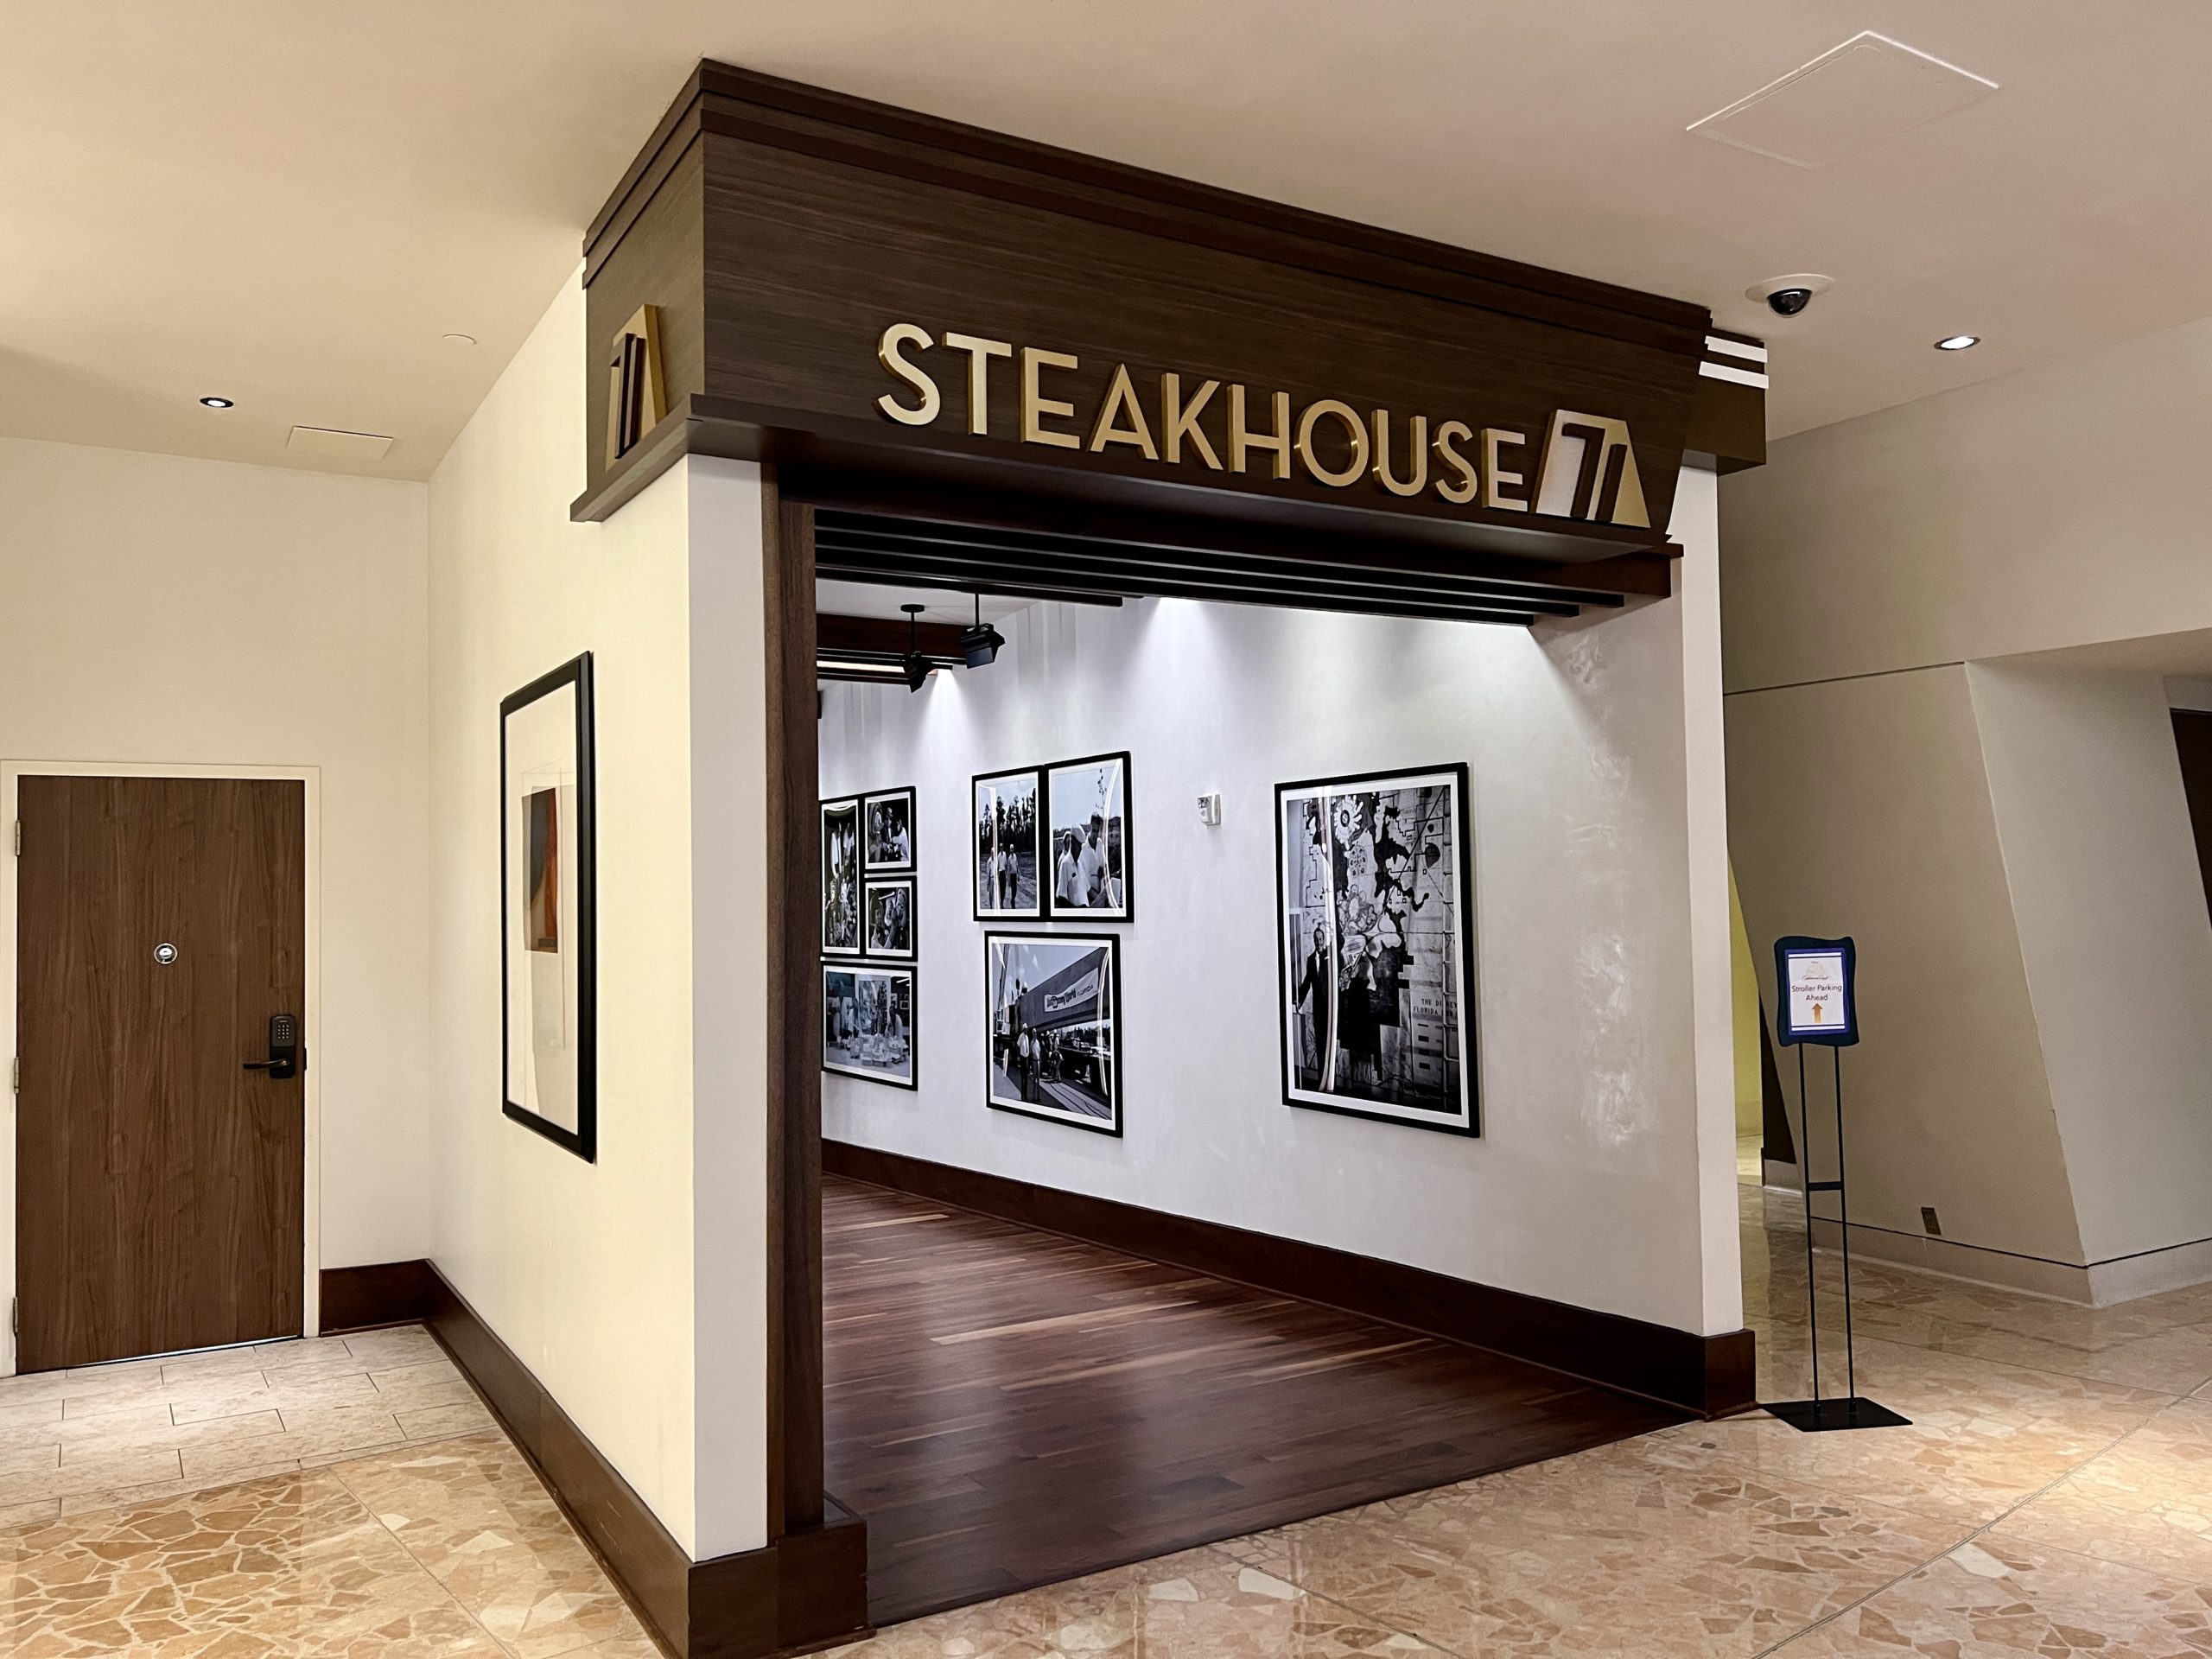 Steakhouse 71